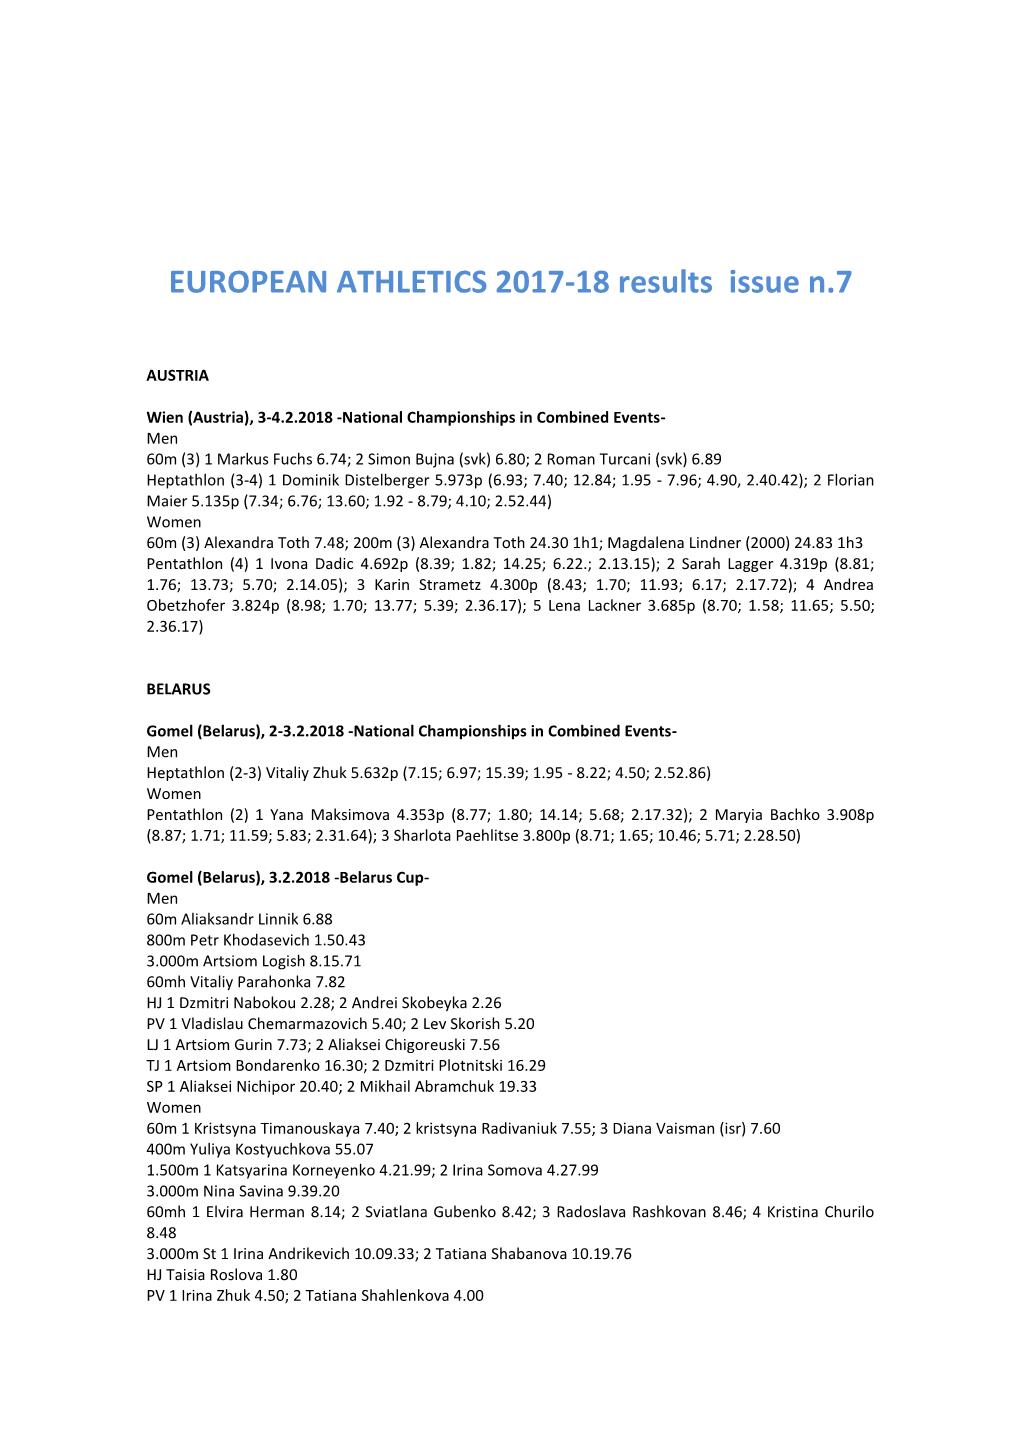 EUROPEAN ATHLETICS 2017-18 Results Issue N.7